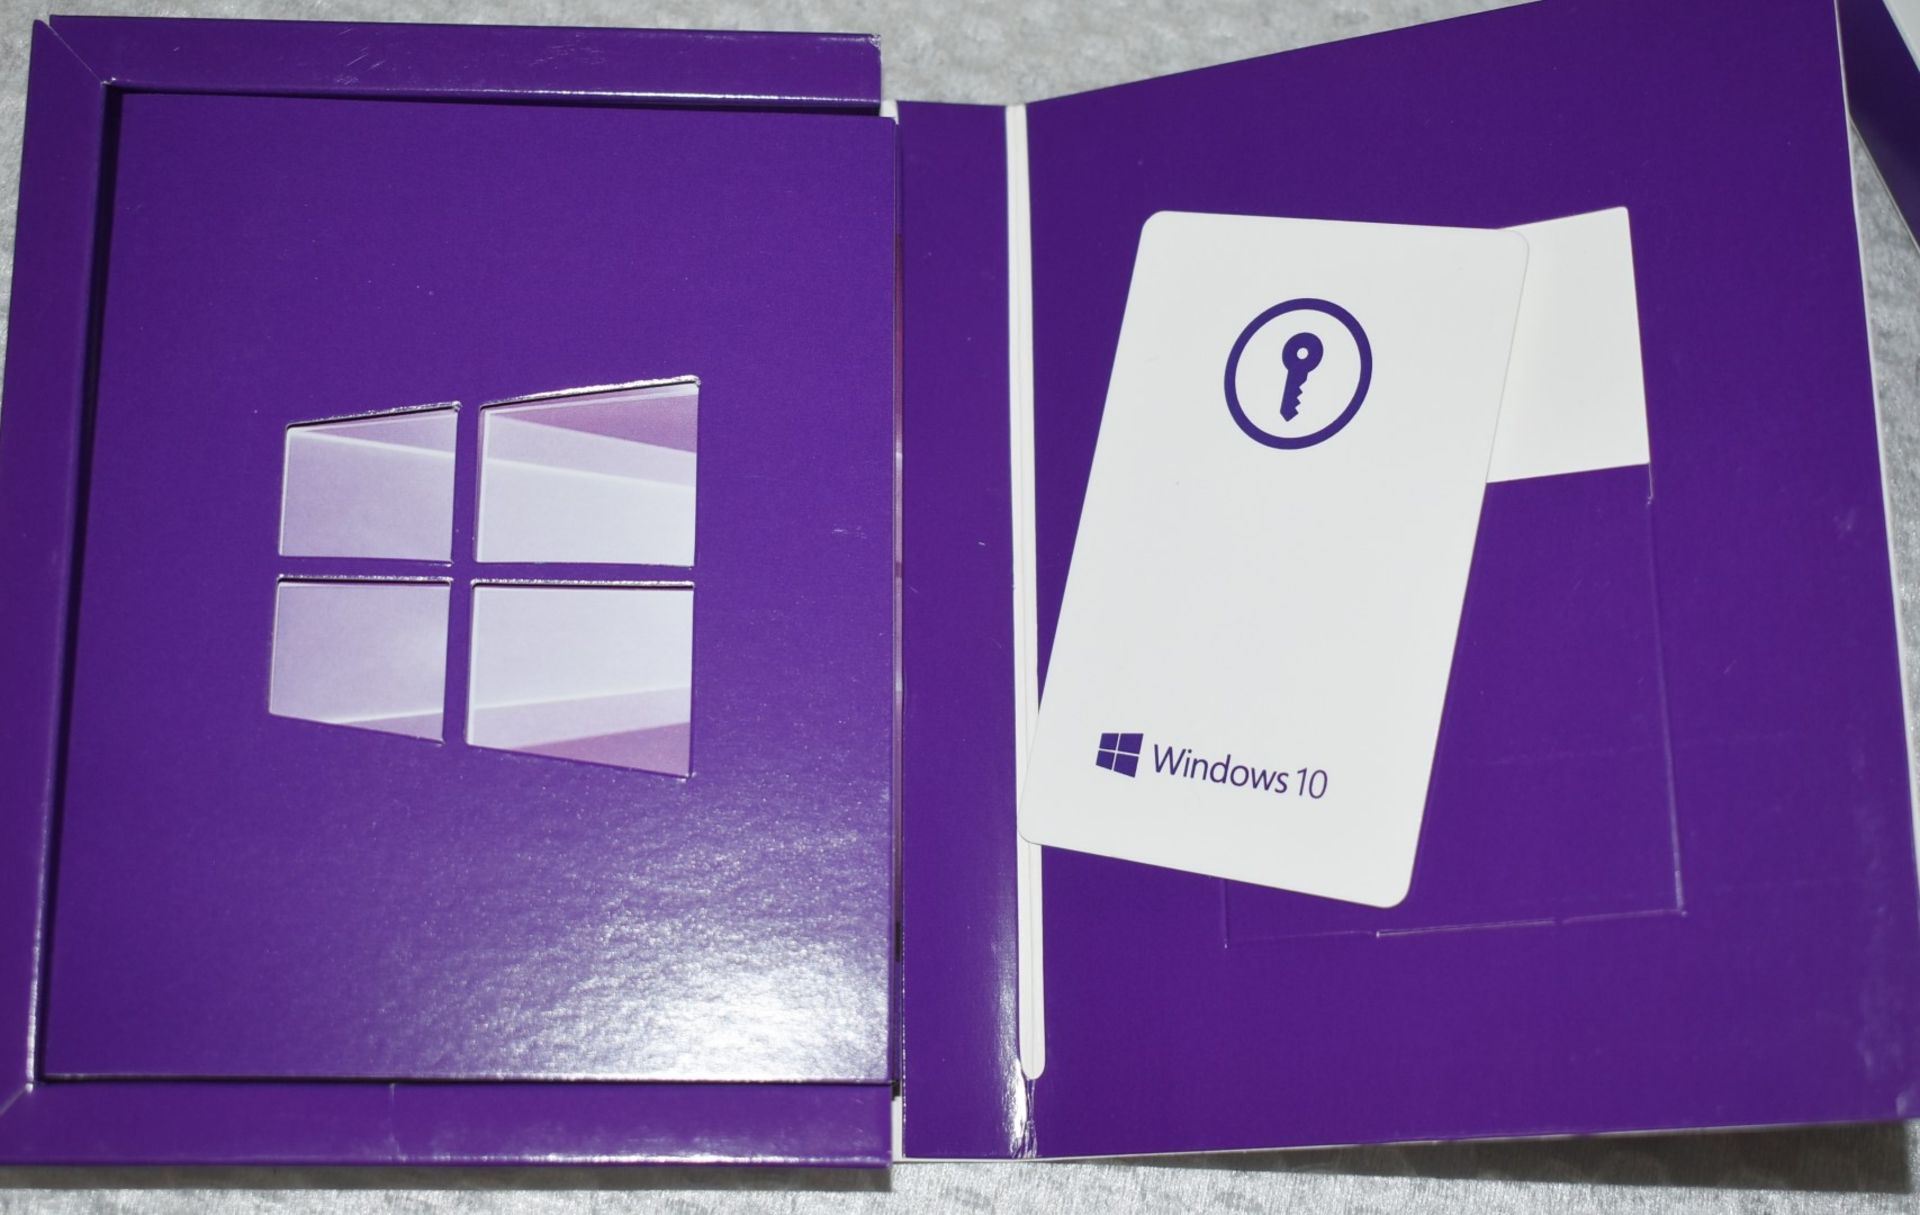 1 x Microsoft Windows 10 Pro Activation Key Card With Original Box - Ref: MPC204 P1 - CL678 - - Image 3 of 4